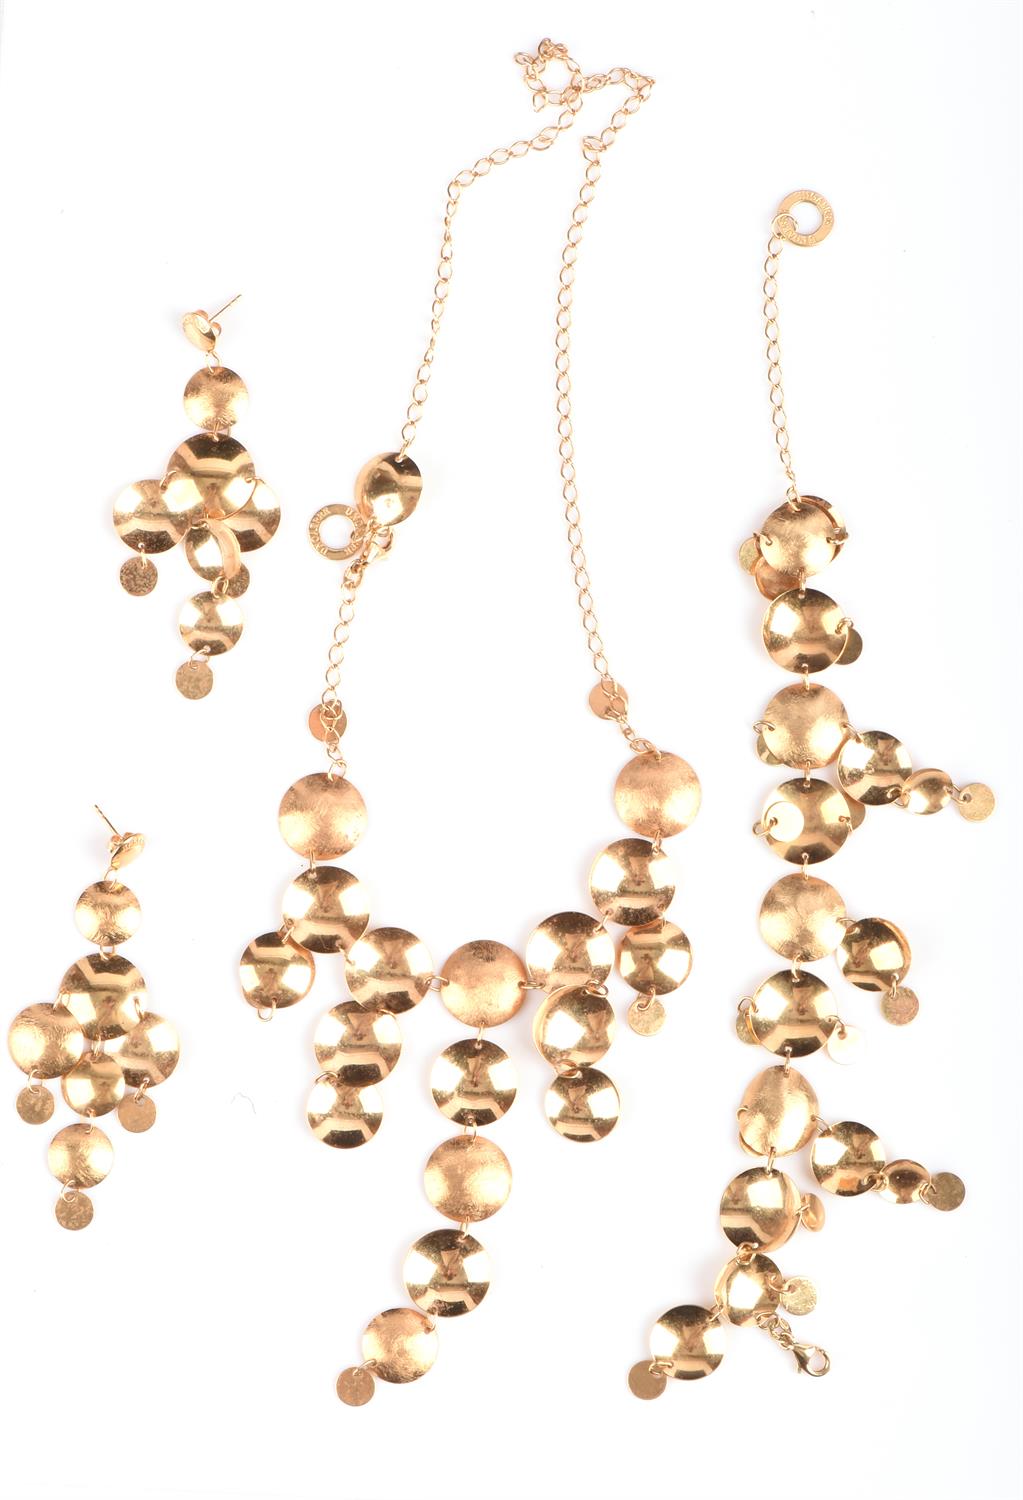 Italian gold fringe necklace, bracelet and earrings set, designed as multiple disc's of varying - Image 4 of 4